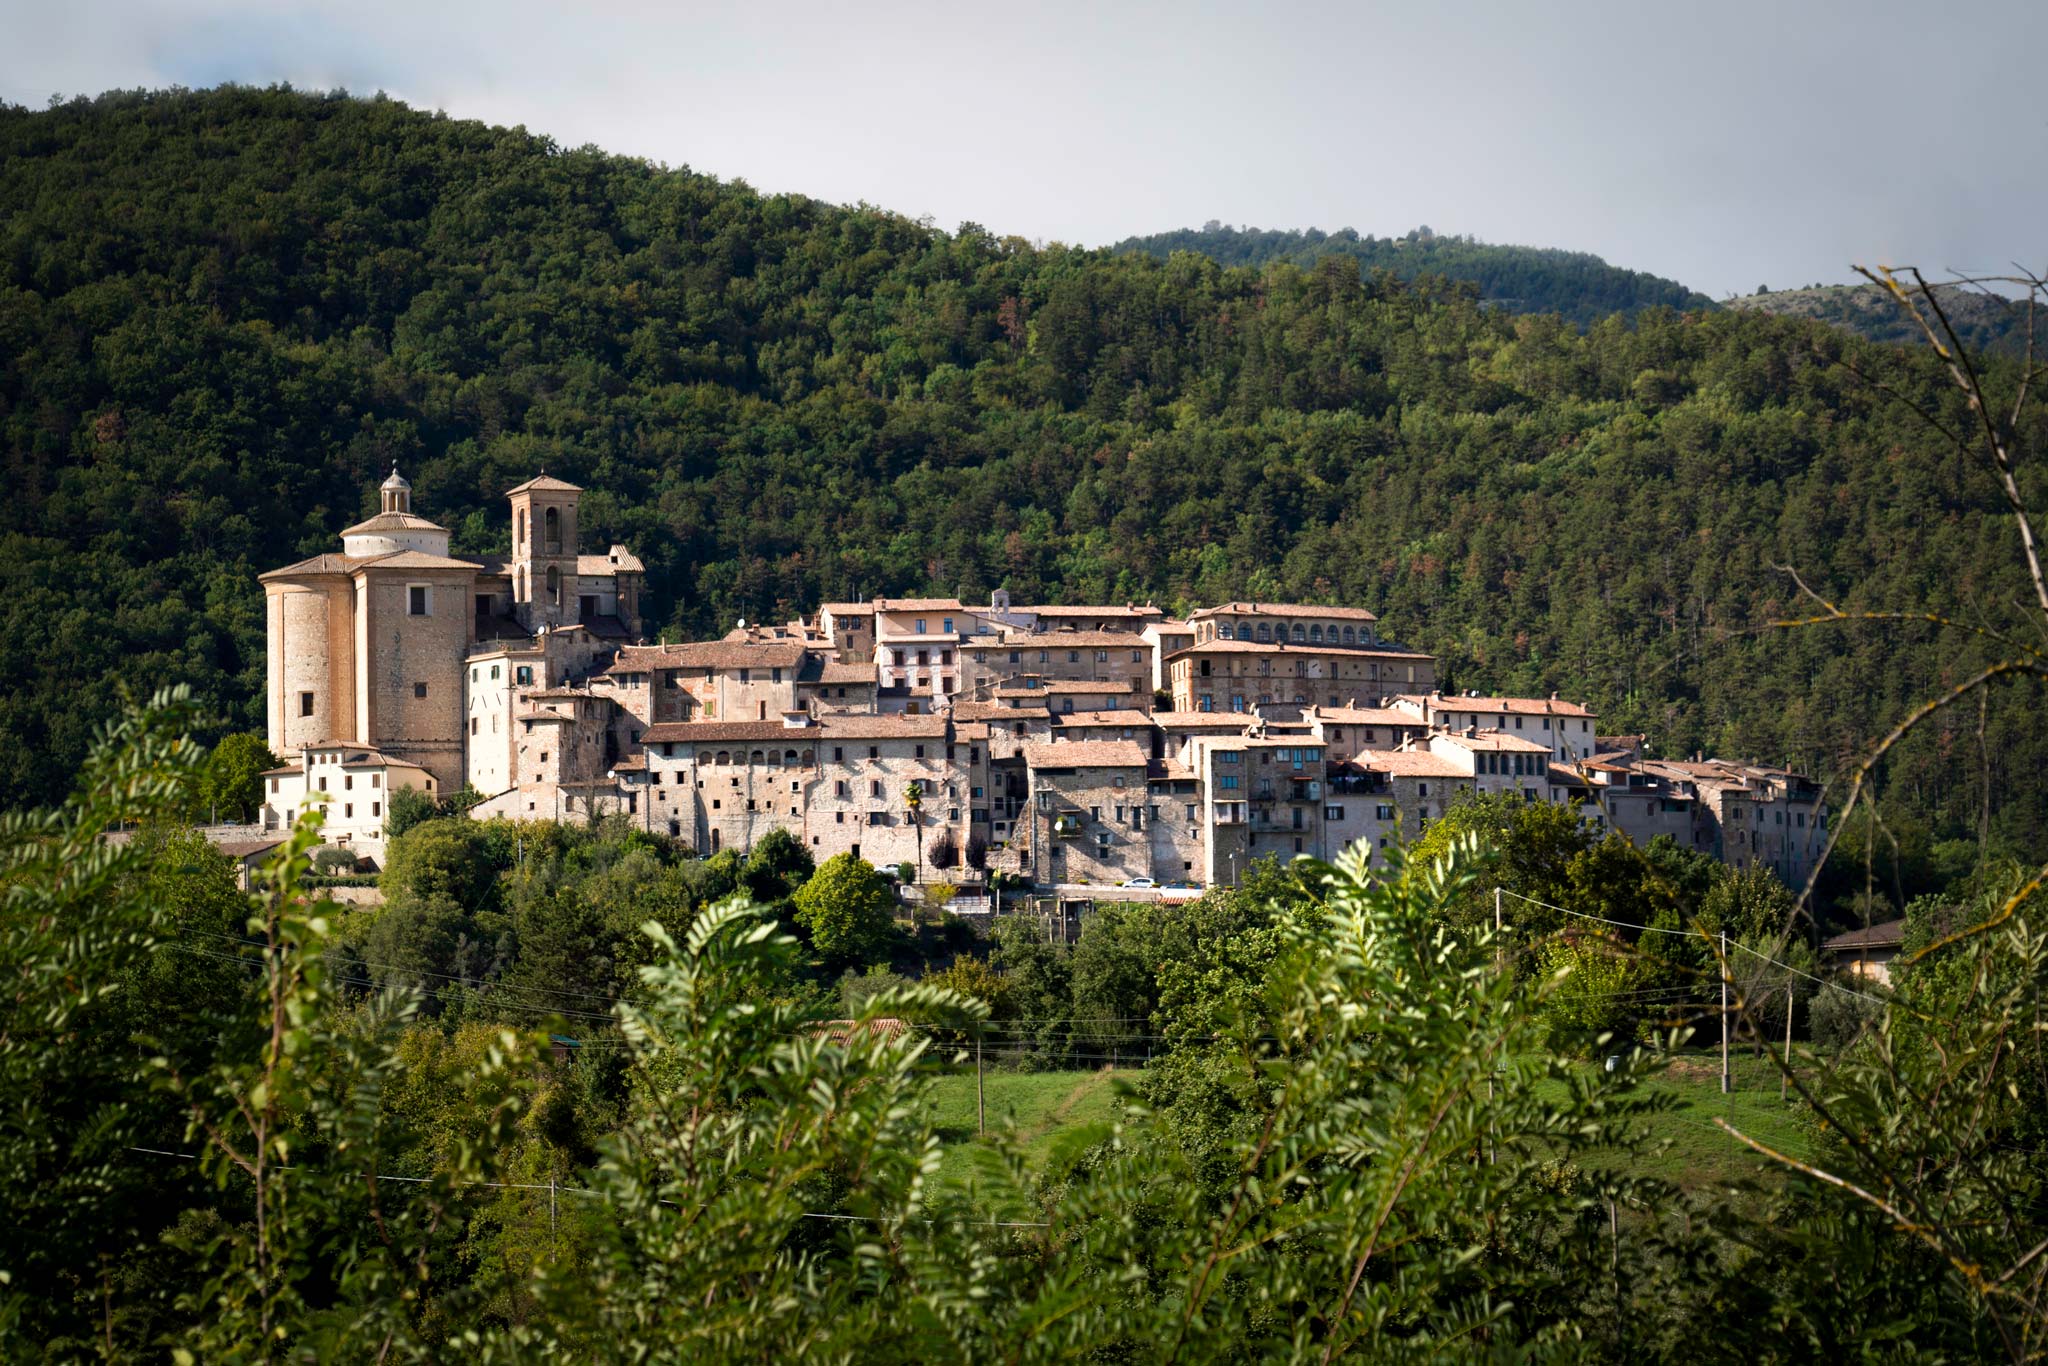 The borgo of Contigliano clings to the hill, creating a delightful village near Rome to visit